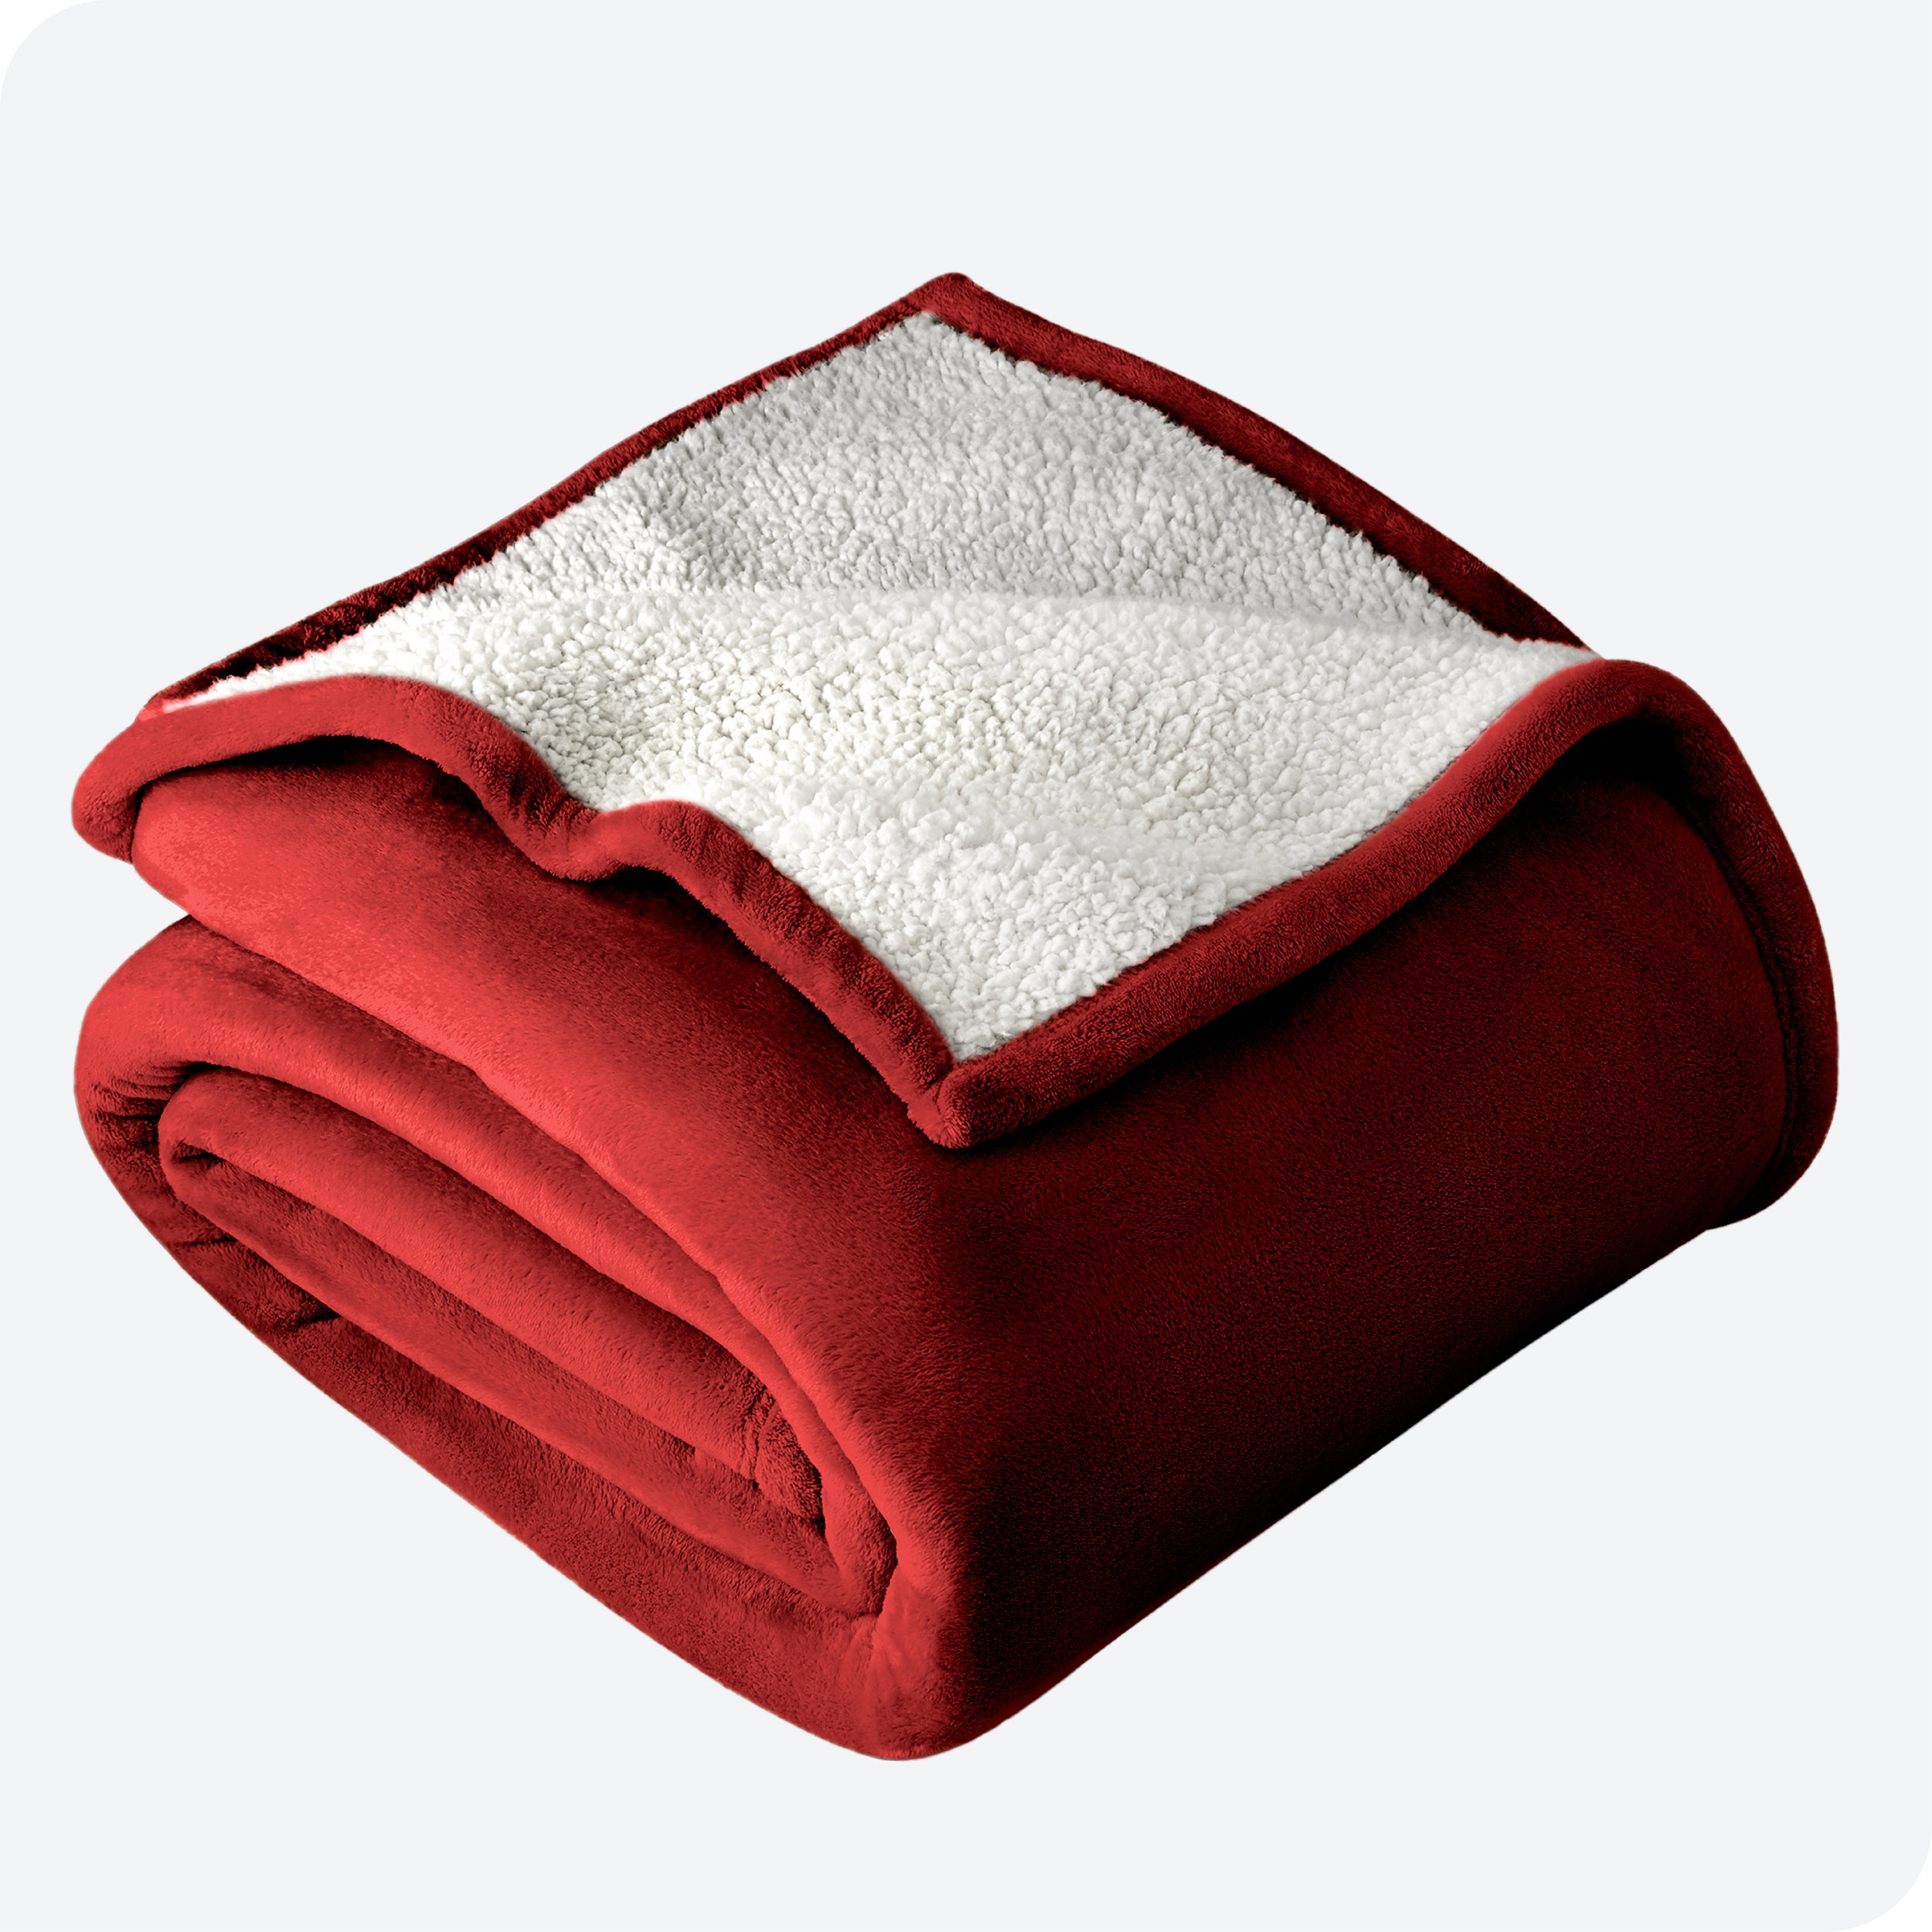 Red Sherpa Blanket folded